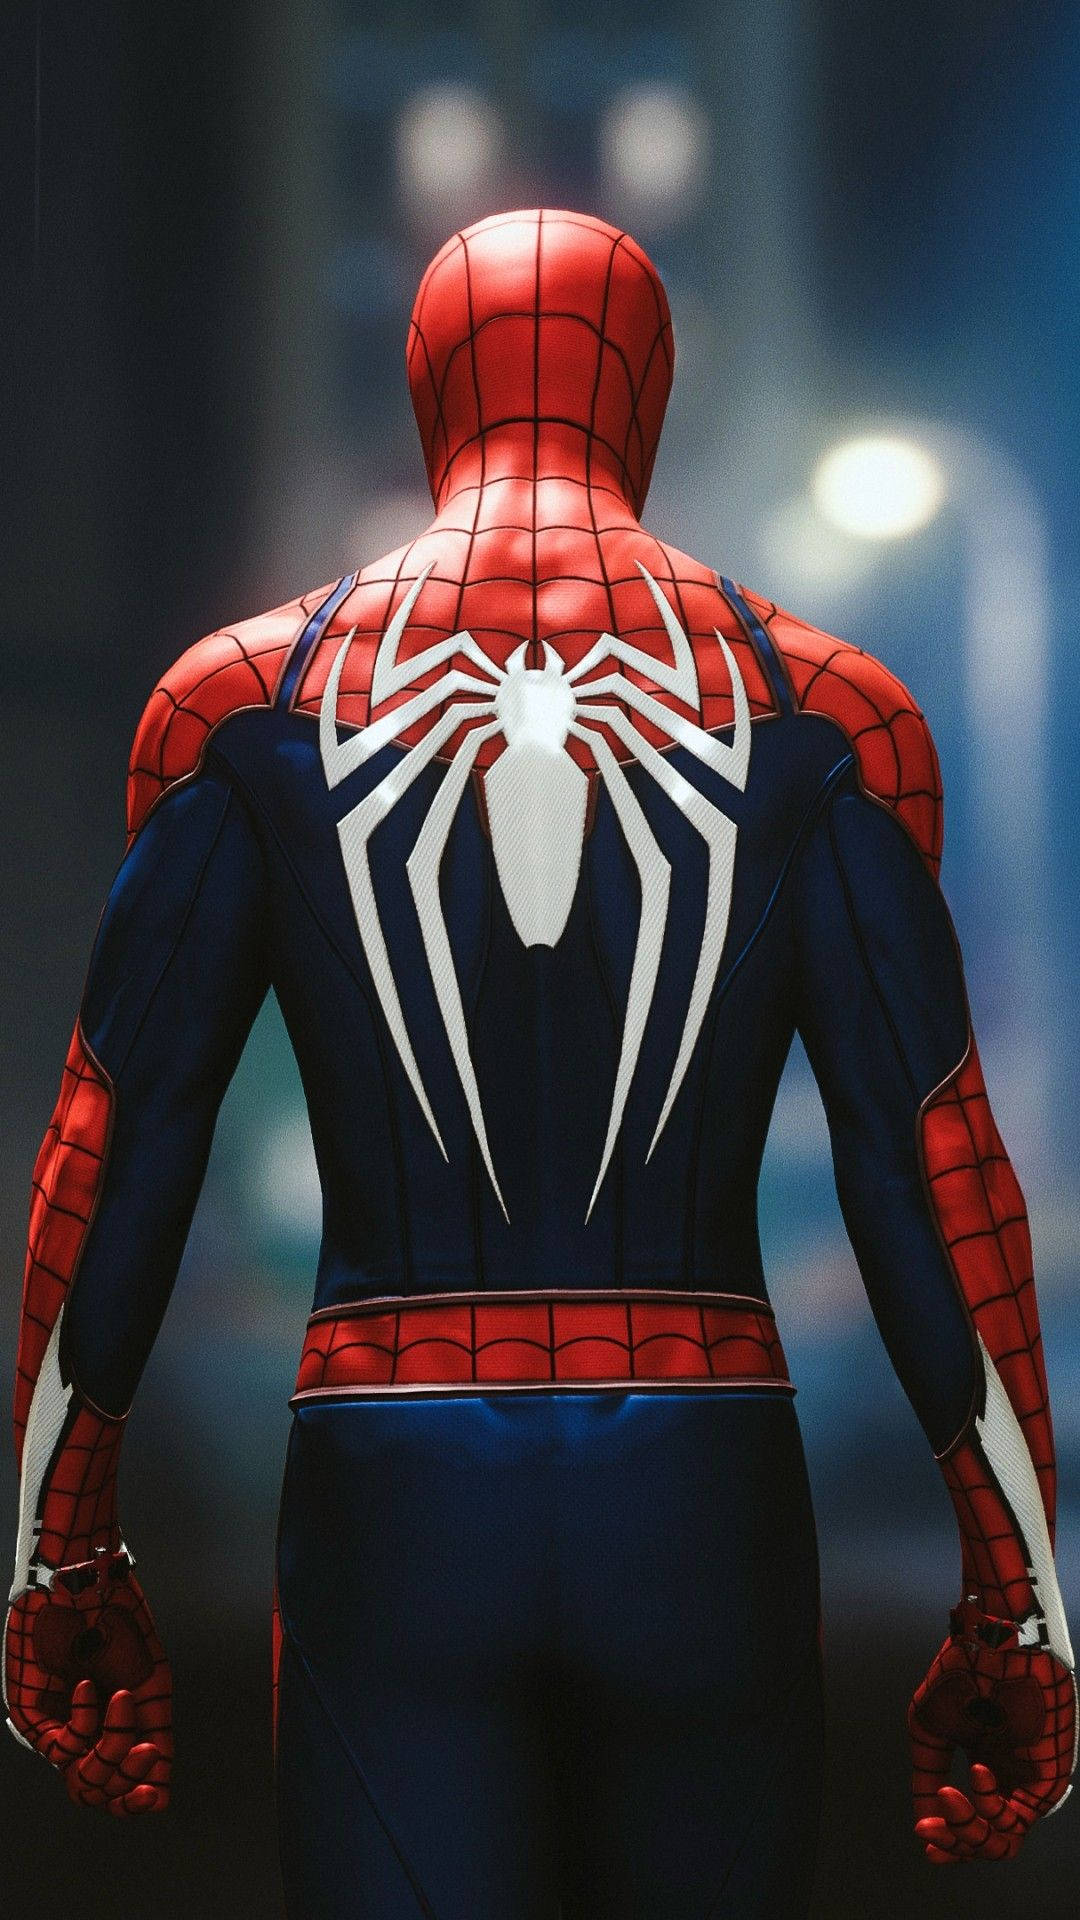 Spiderman marvel superheroes back showing spider logo white.